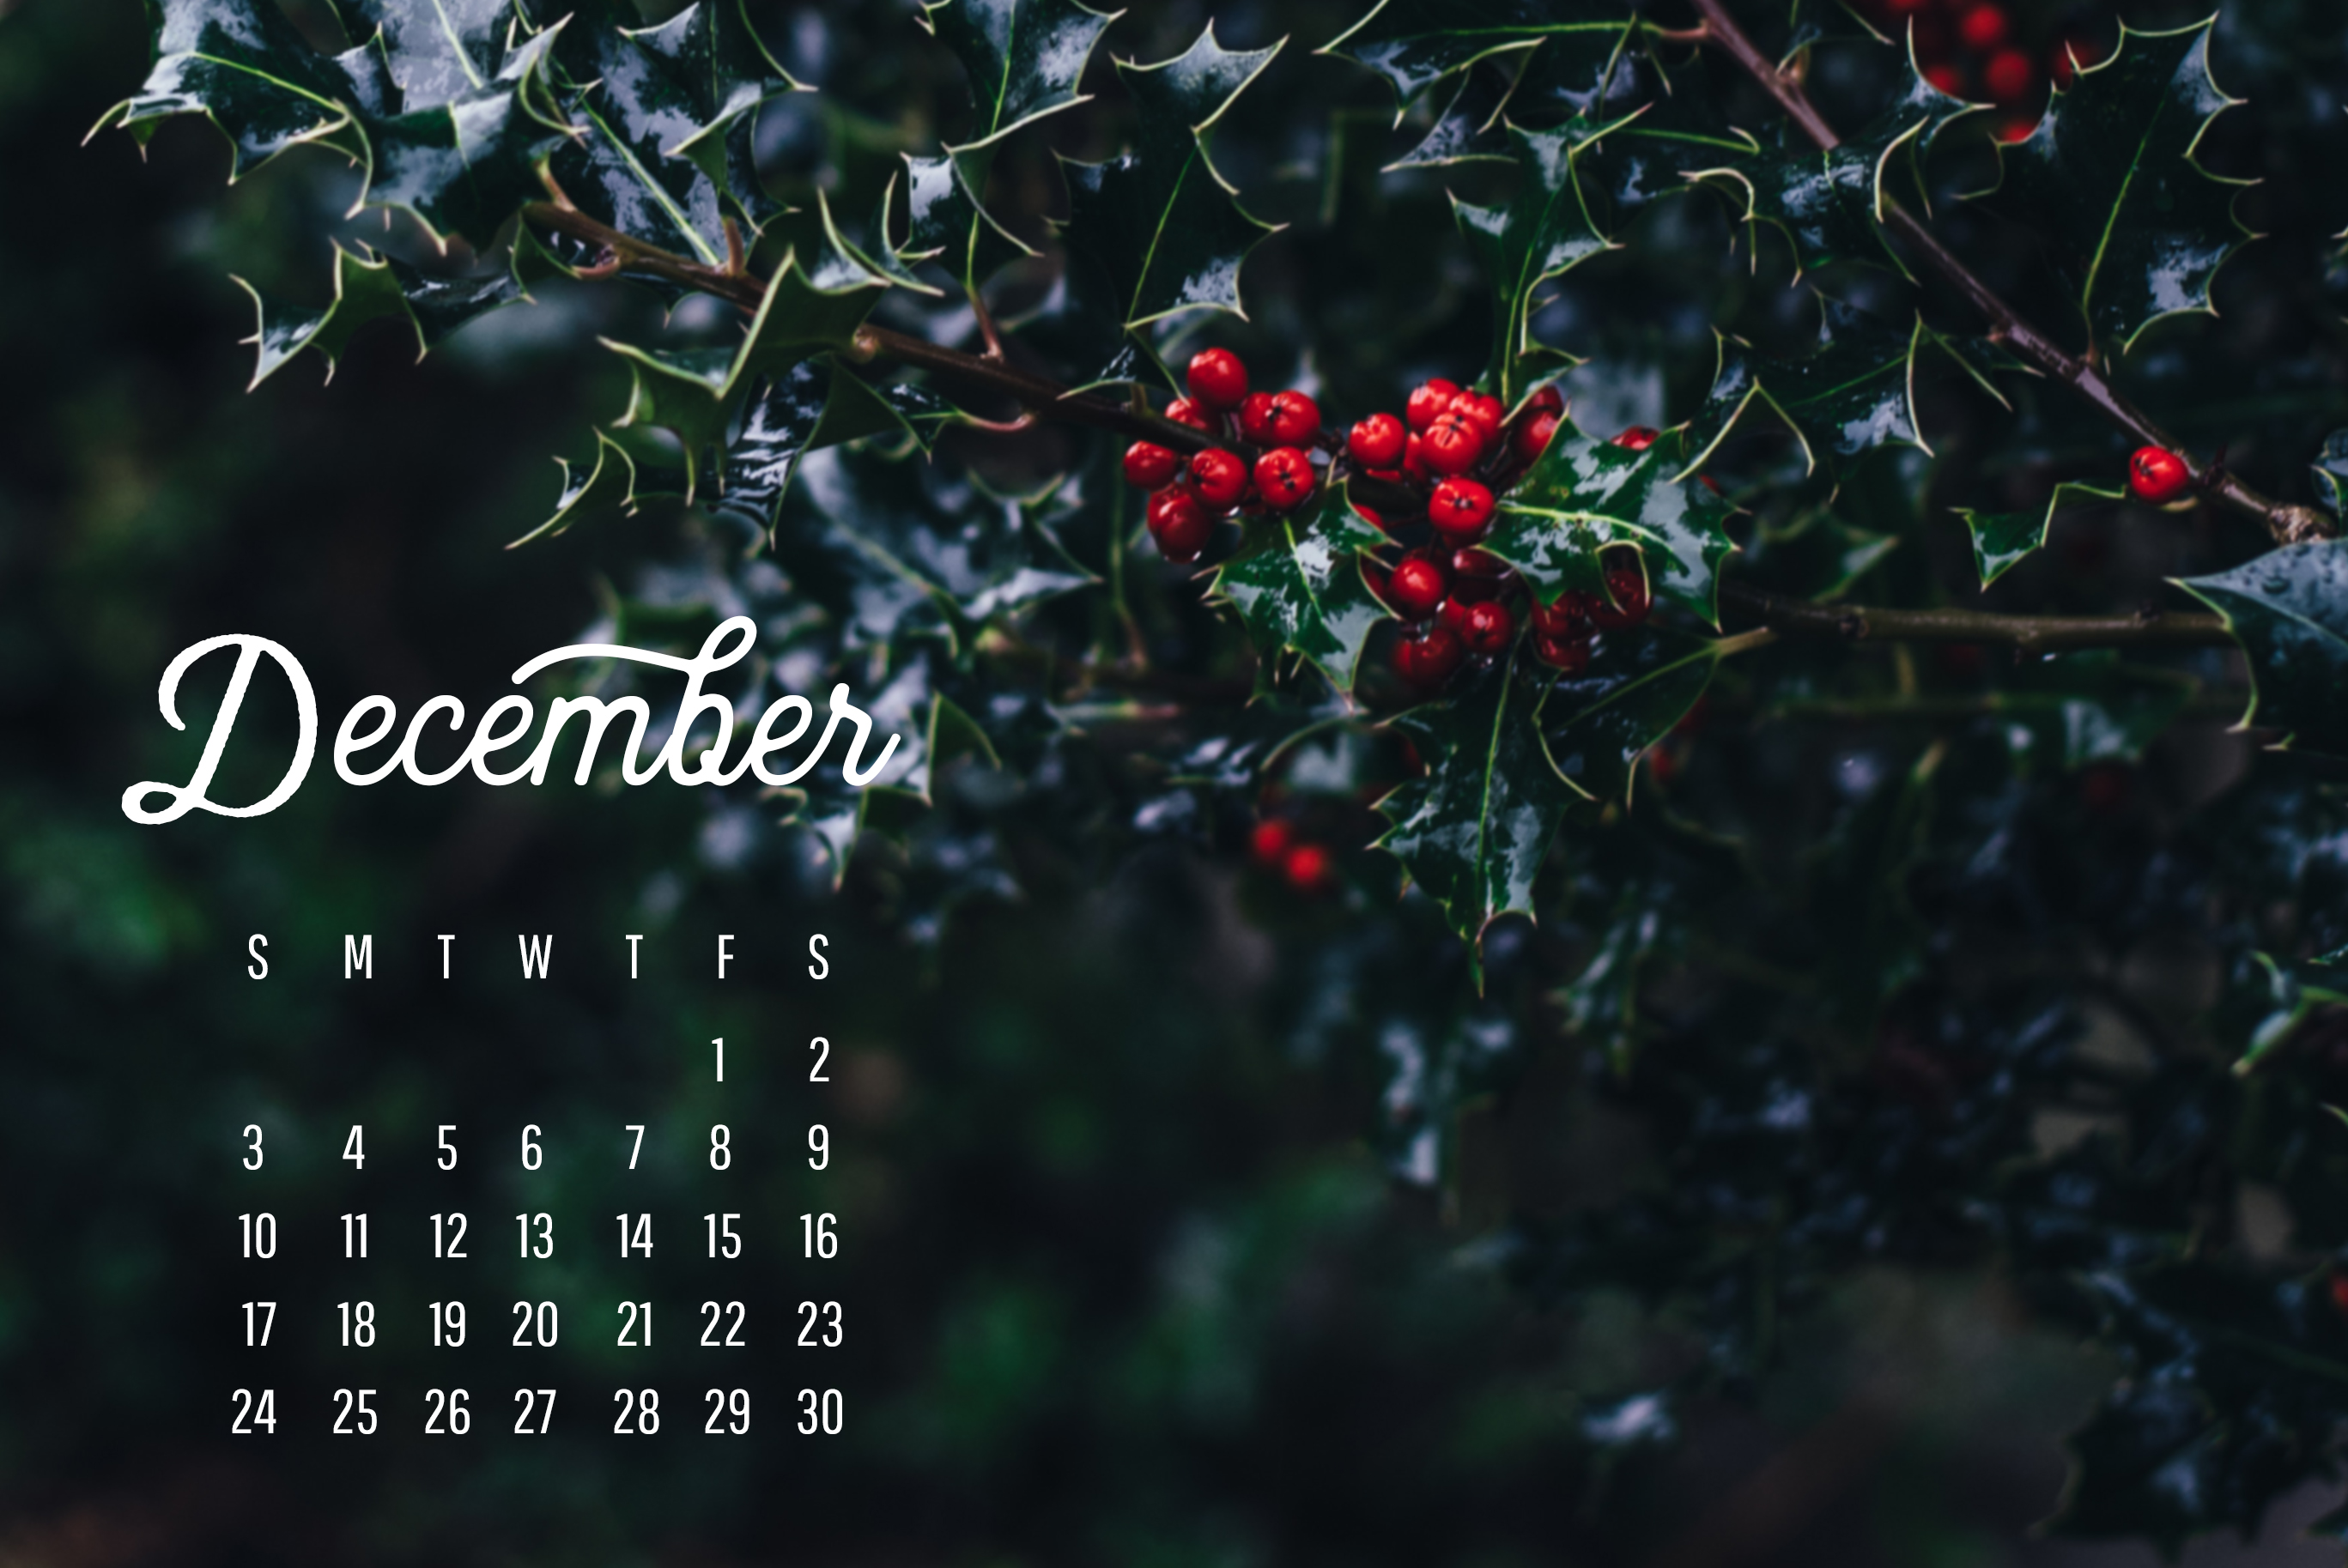 Free December Christmas Desktop Images